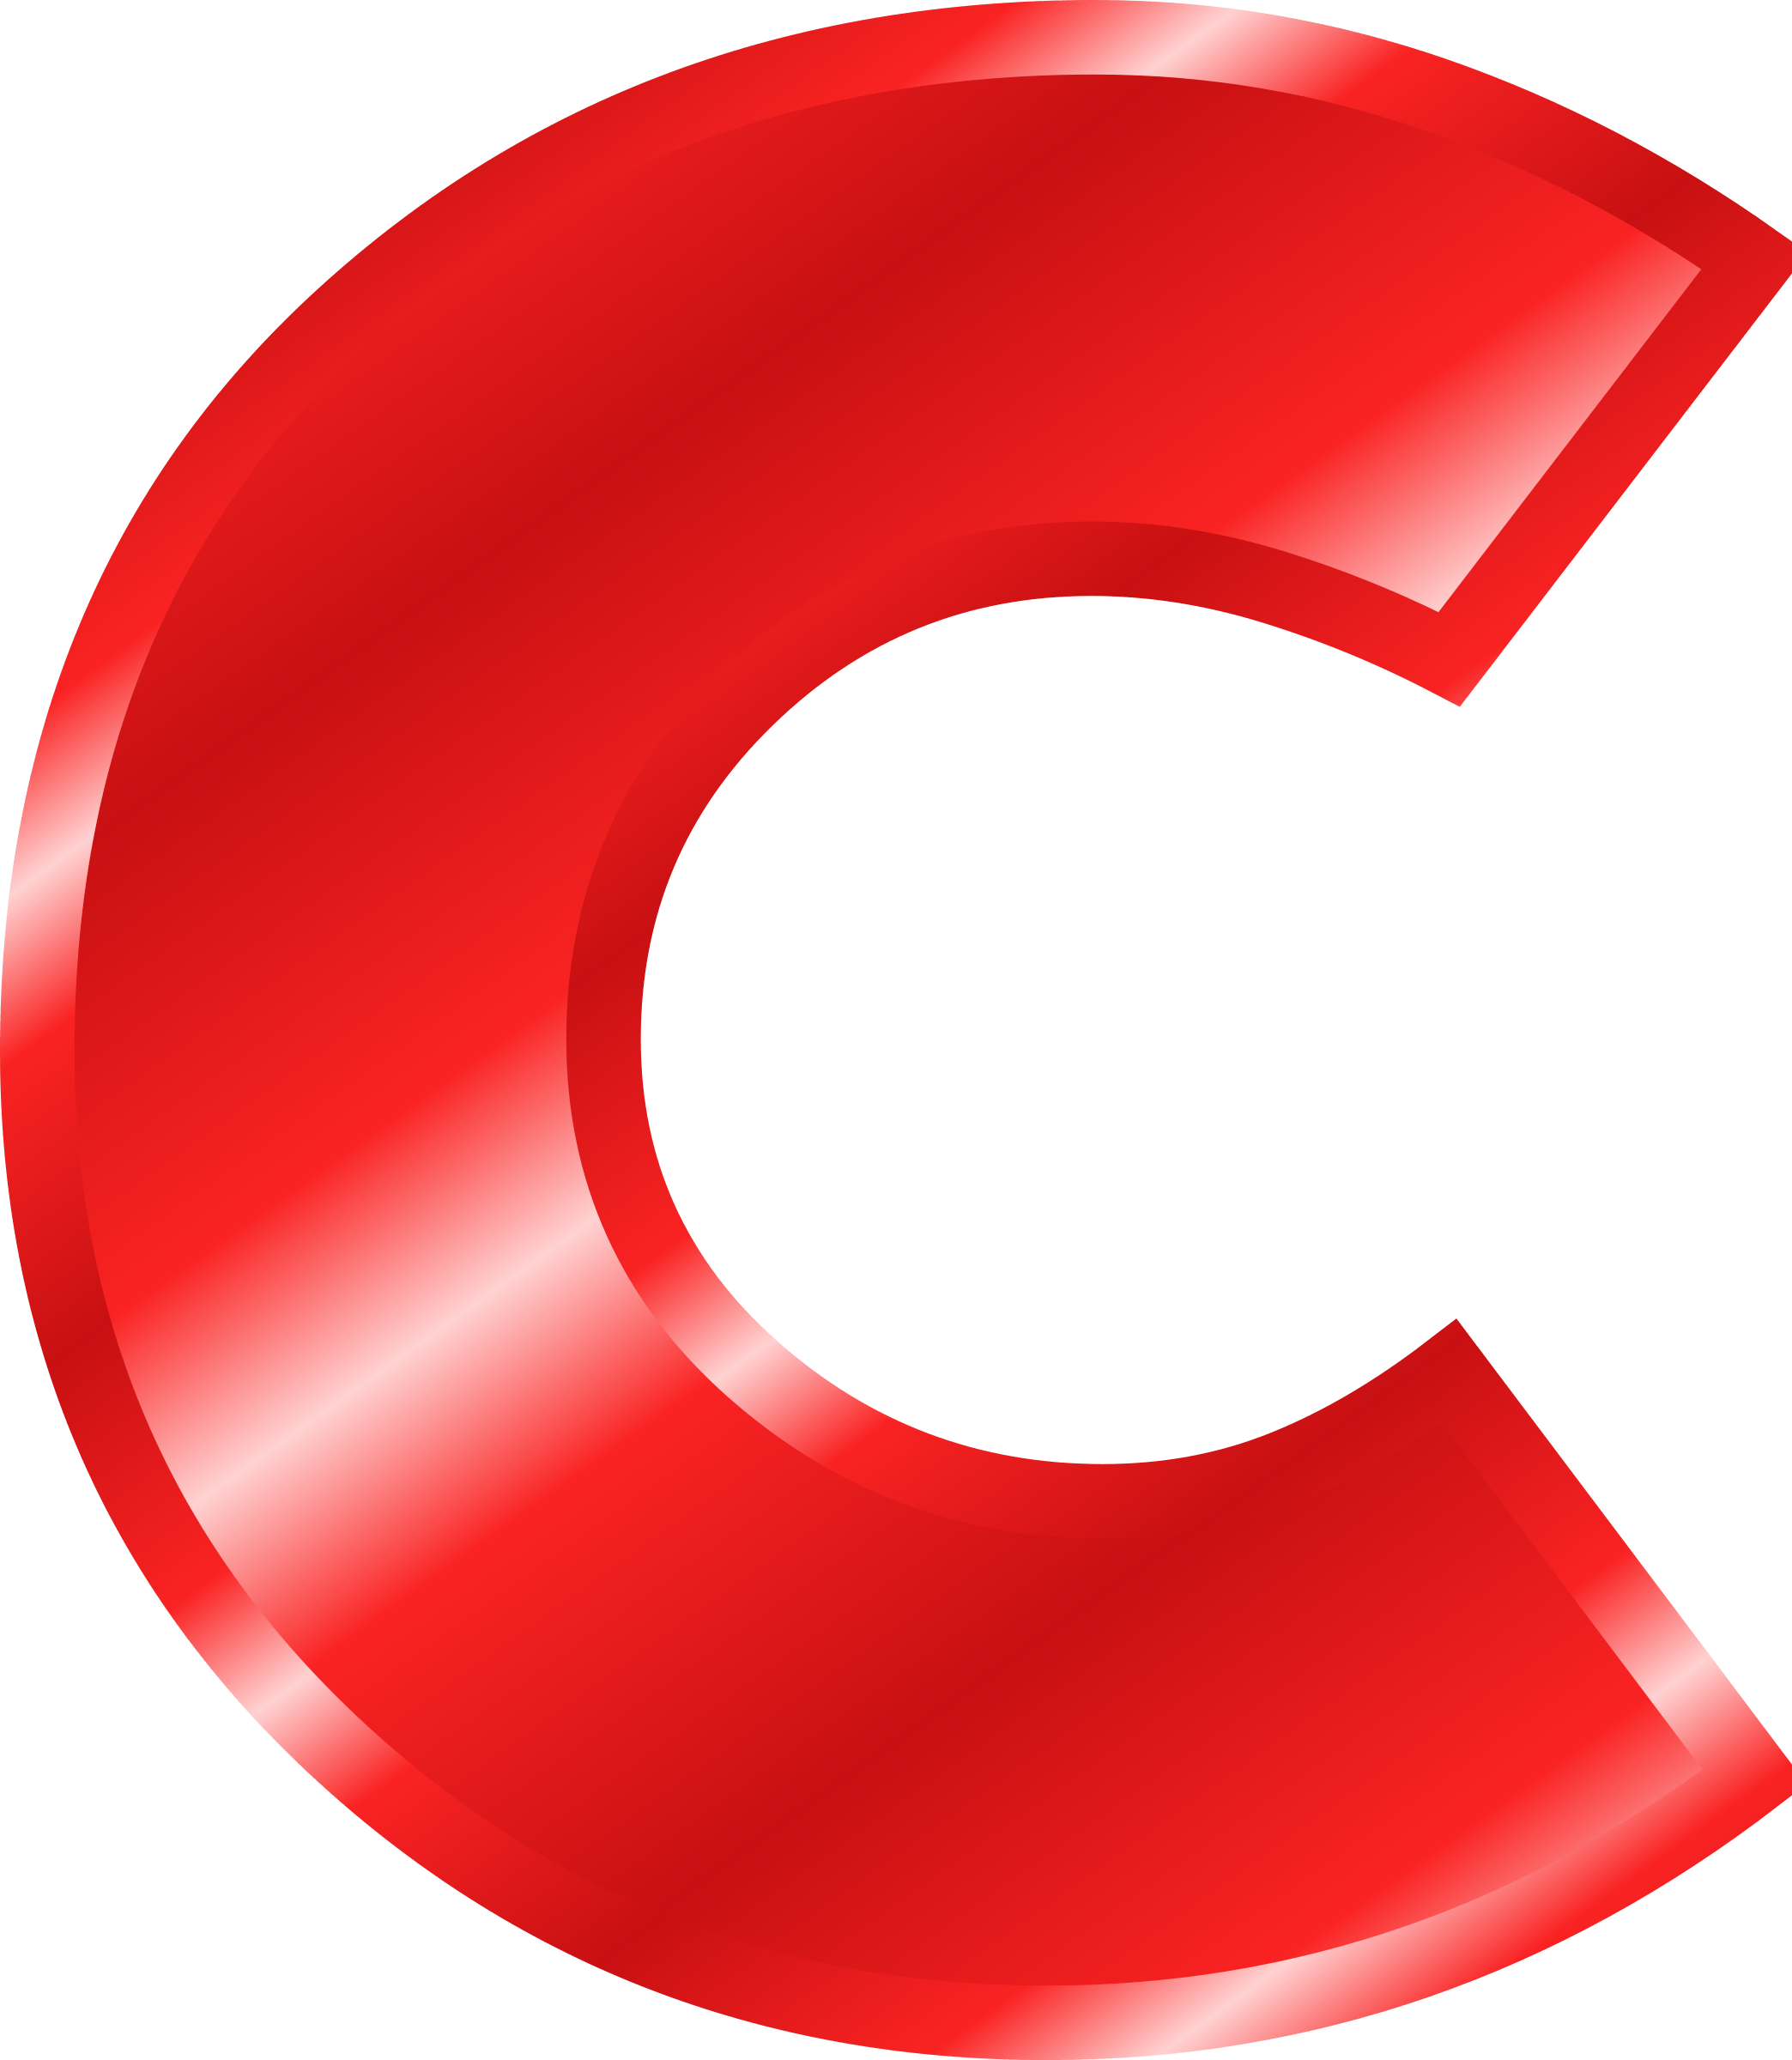 Big Red C Logo - Big red letter s Logos